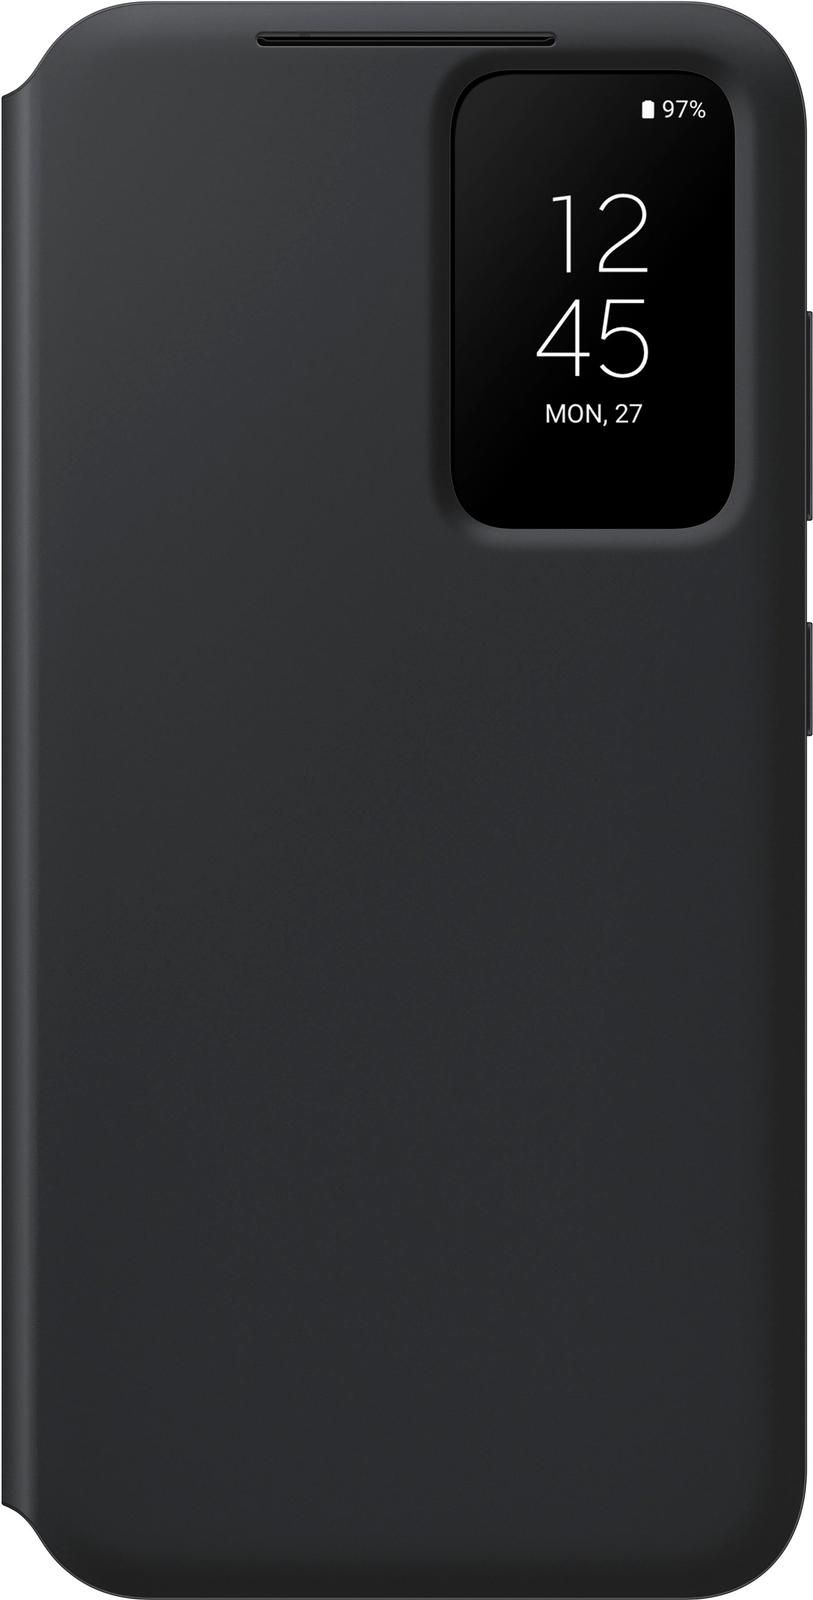 Galaxy S23 Silicone Grip Case, Black Mobile Accessories - EF-GS911TBEGUS